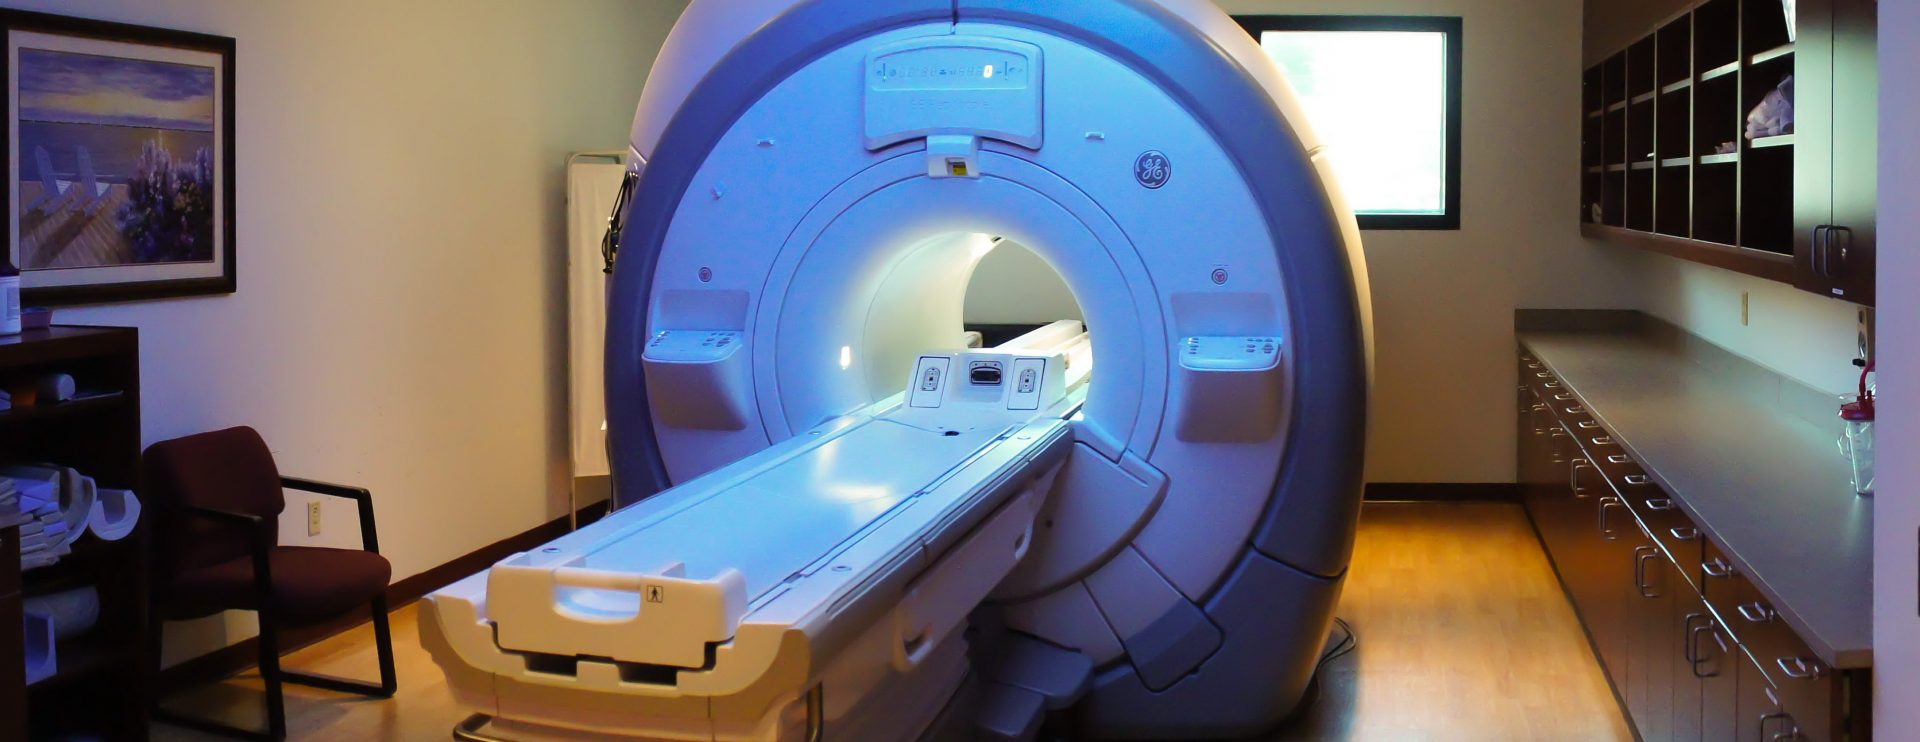 MRI Female Abdominal Case Study